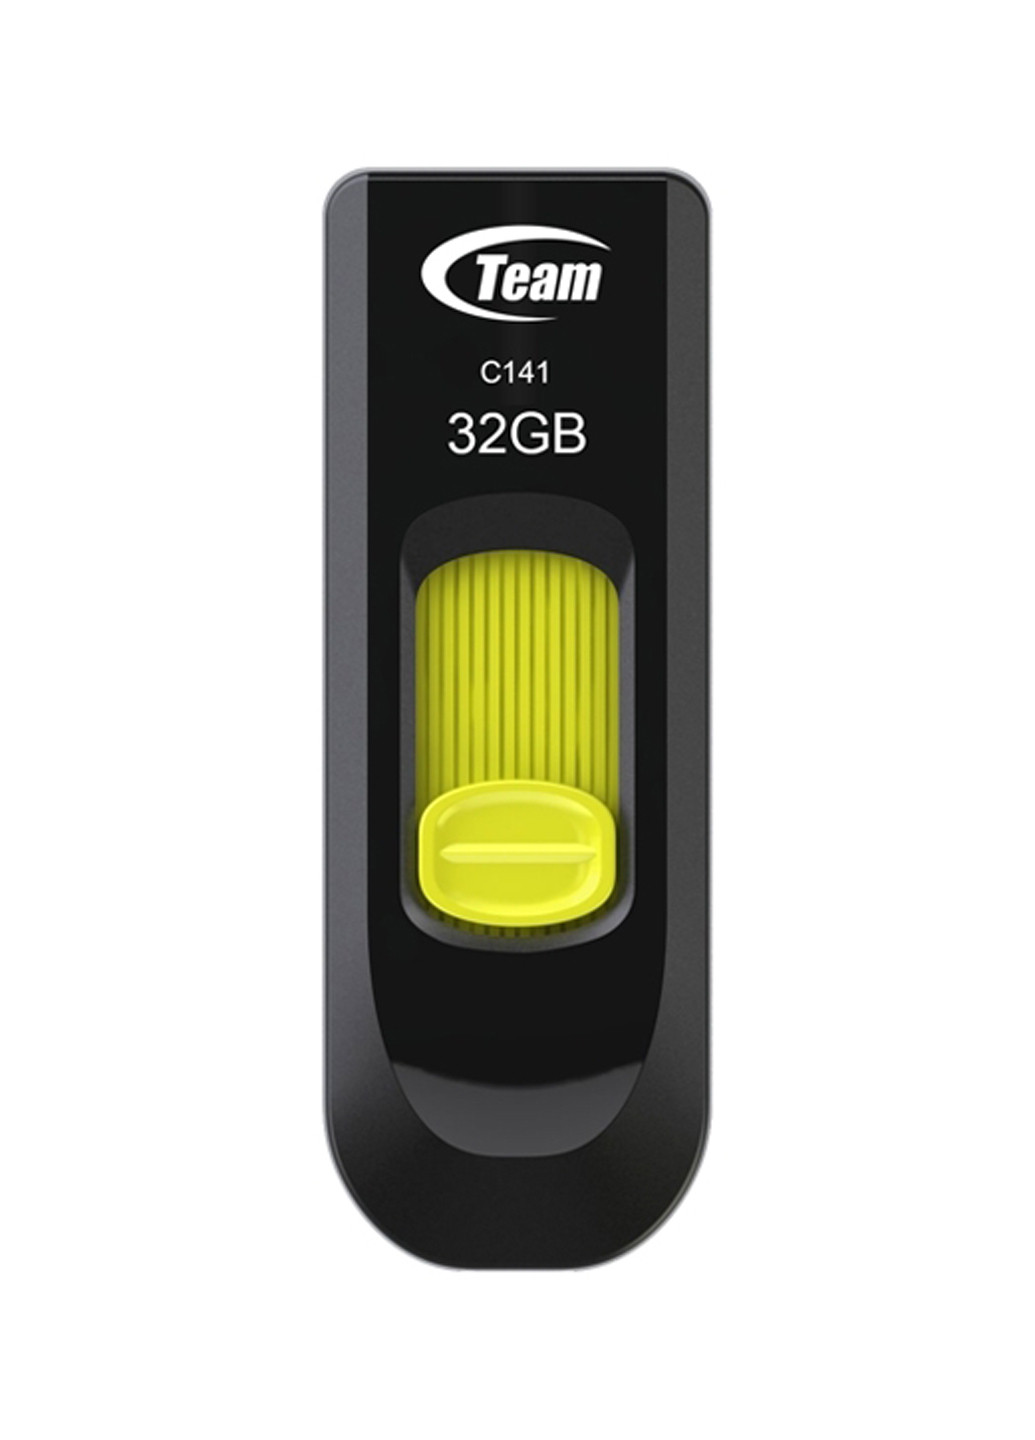 Флеш память USB C141 32GB Yellow (TC14132GY01) Team флеш память usb team c141 32gb yellow (tc14132gy01) (134201667)